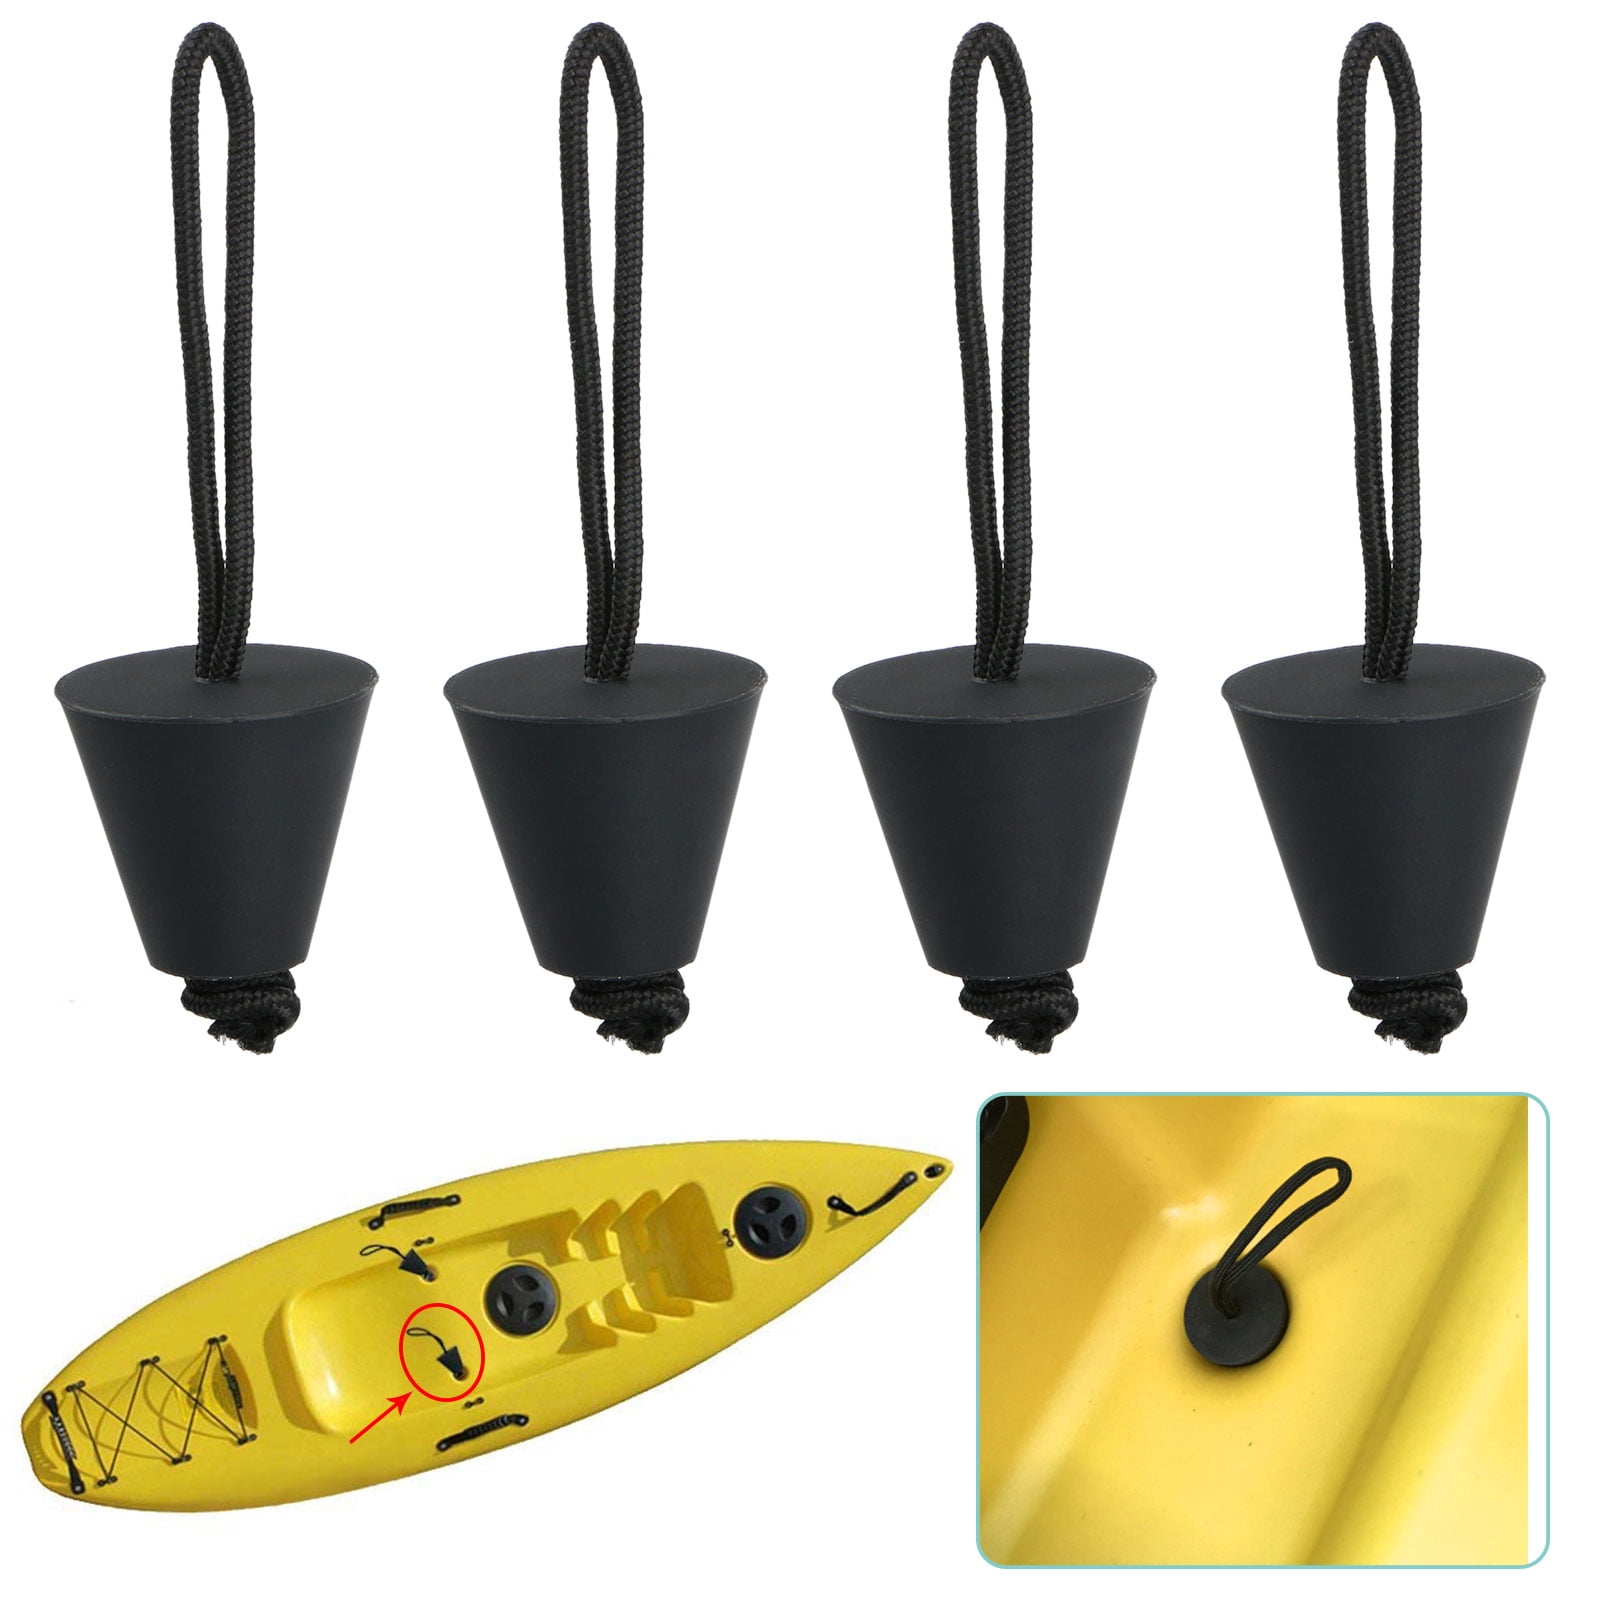 8 PCS Universal Kayak Scupper Plug Kit Fit 3/4" to 1.5" kayak Scupper Holes ESA 